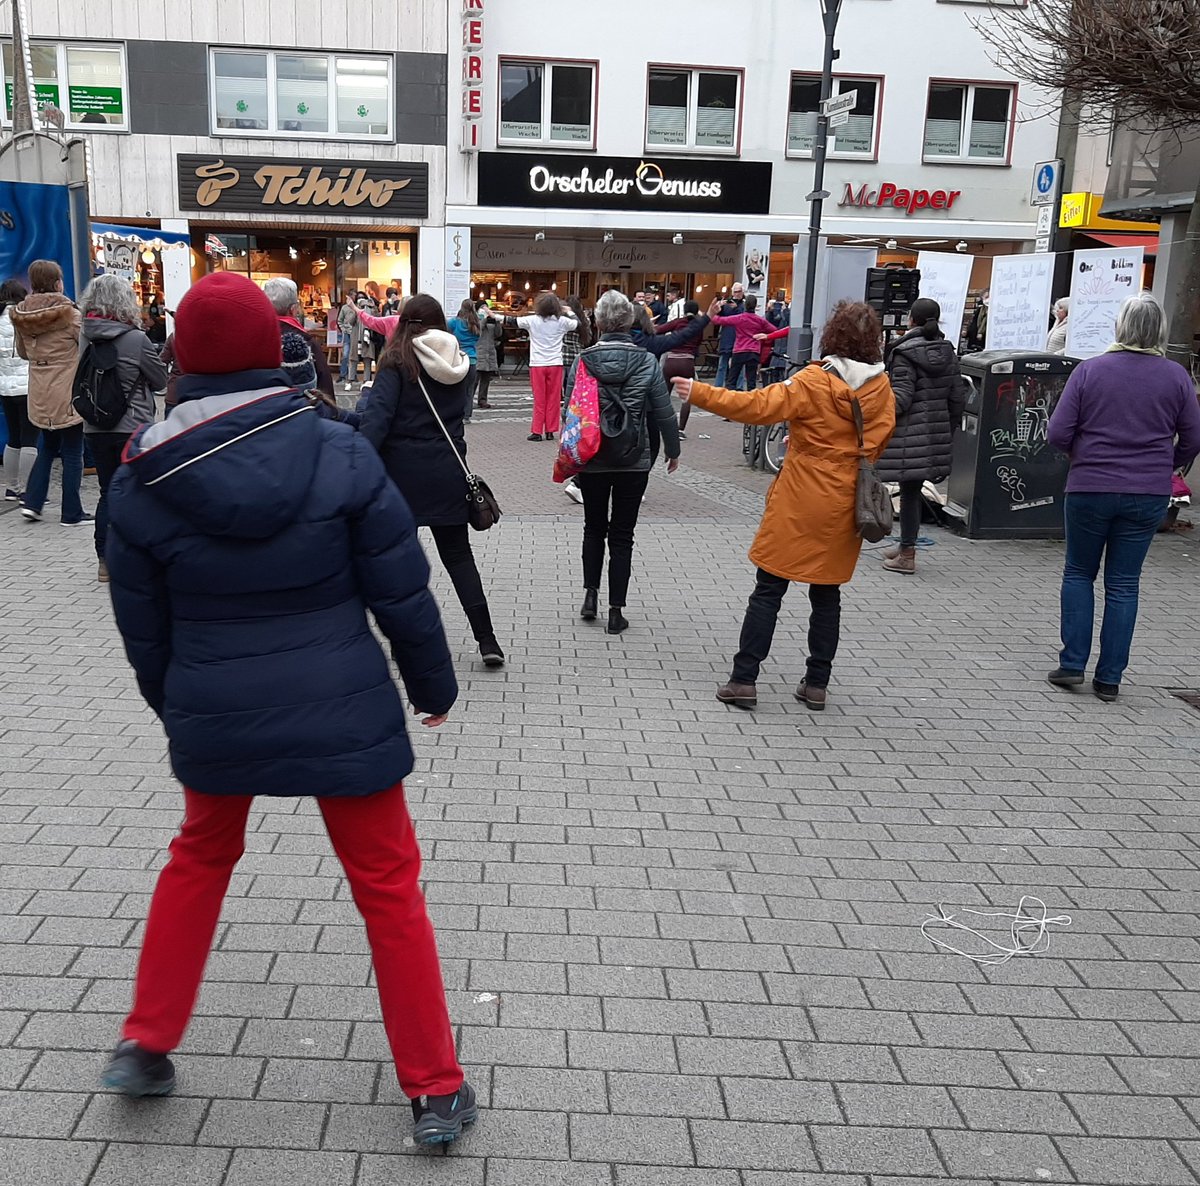 Na klar:
Bürgermeisterin Antje Runge
war auch dabei.
#OneBillionRising 
@TDFeV 
#FeminismMatters
@SPD_Oberursel
@oberursel